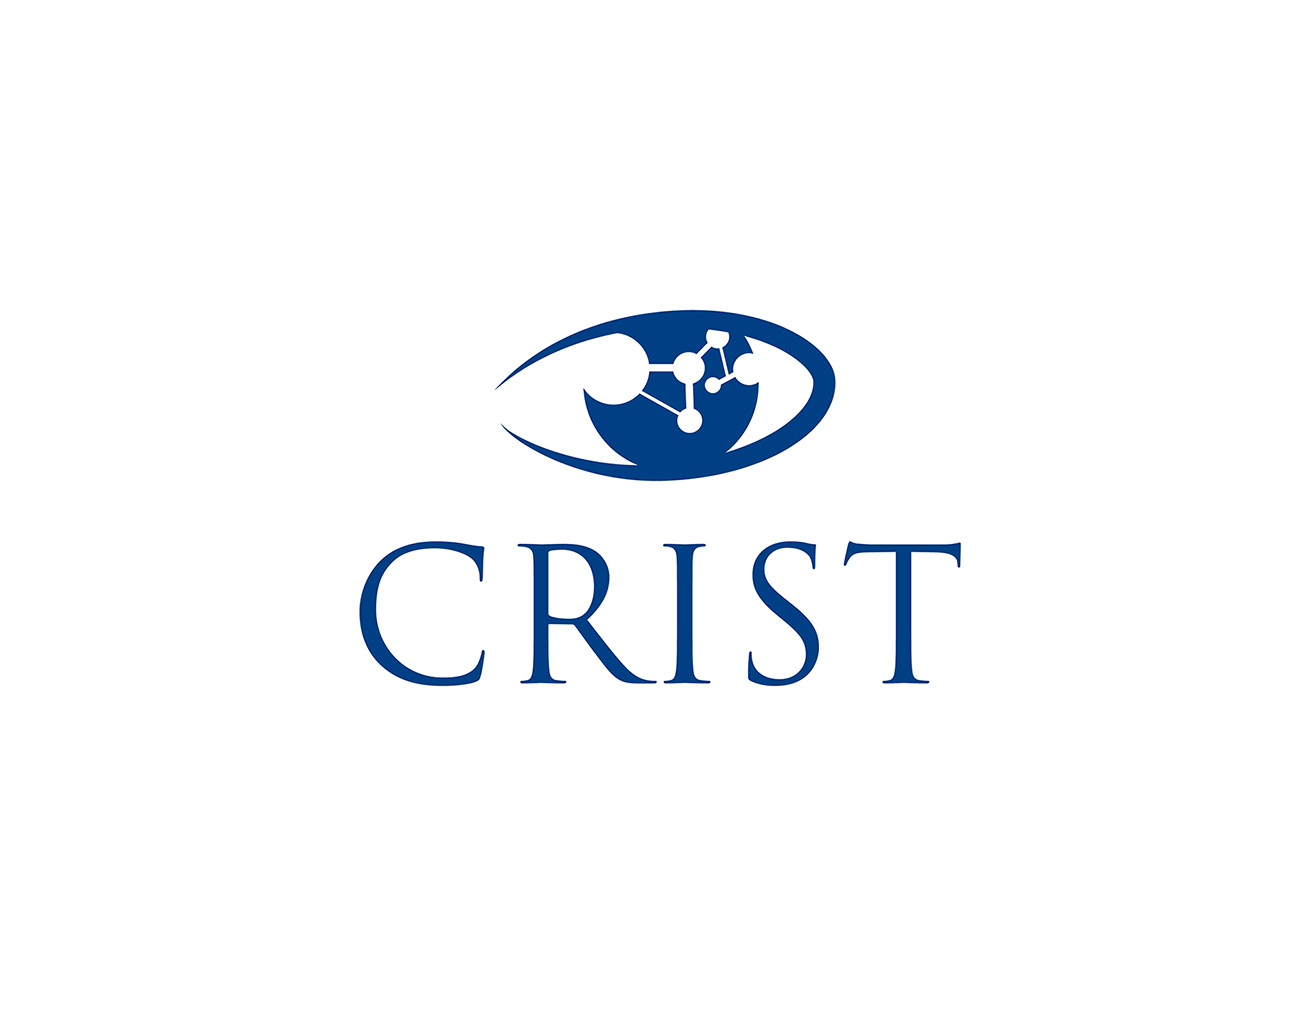 crist-logo